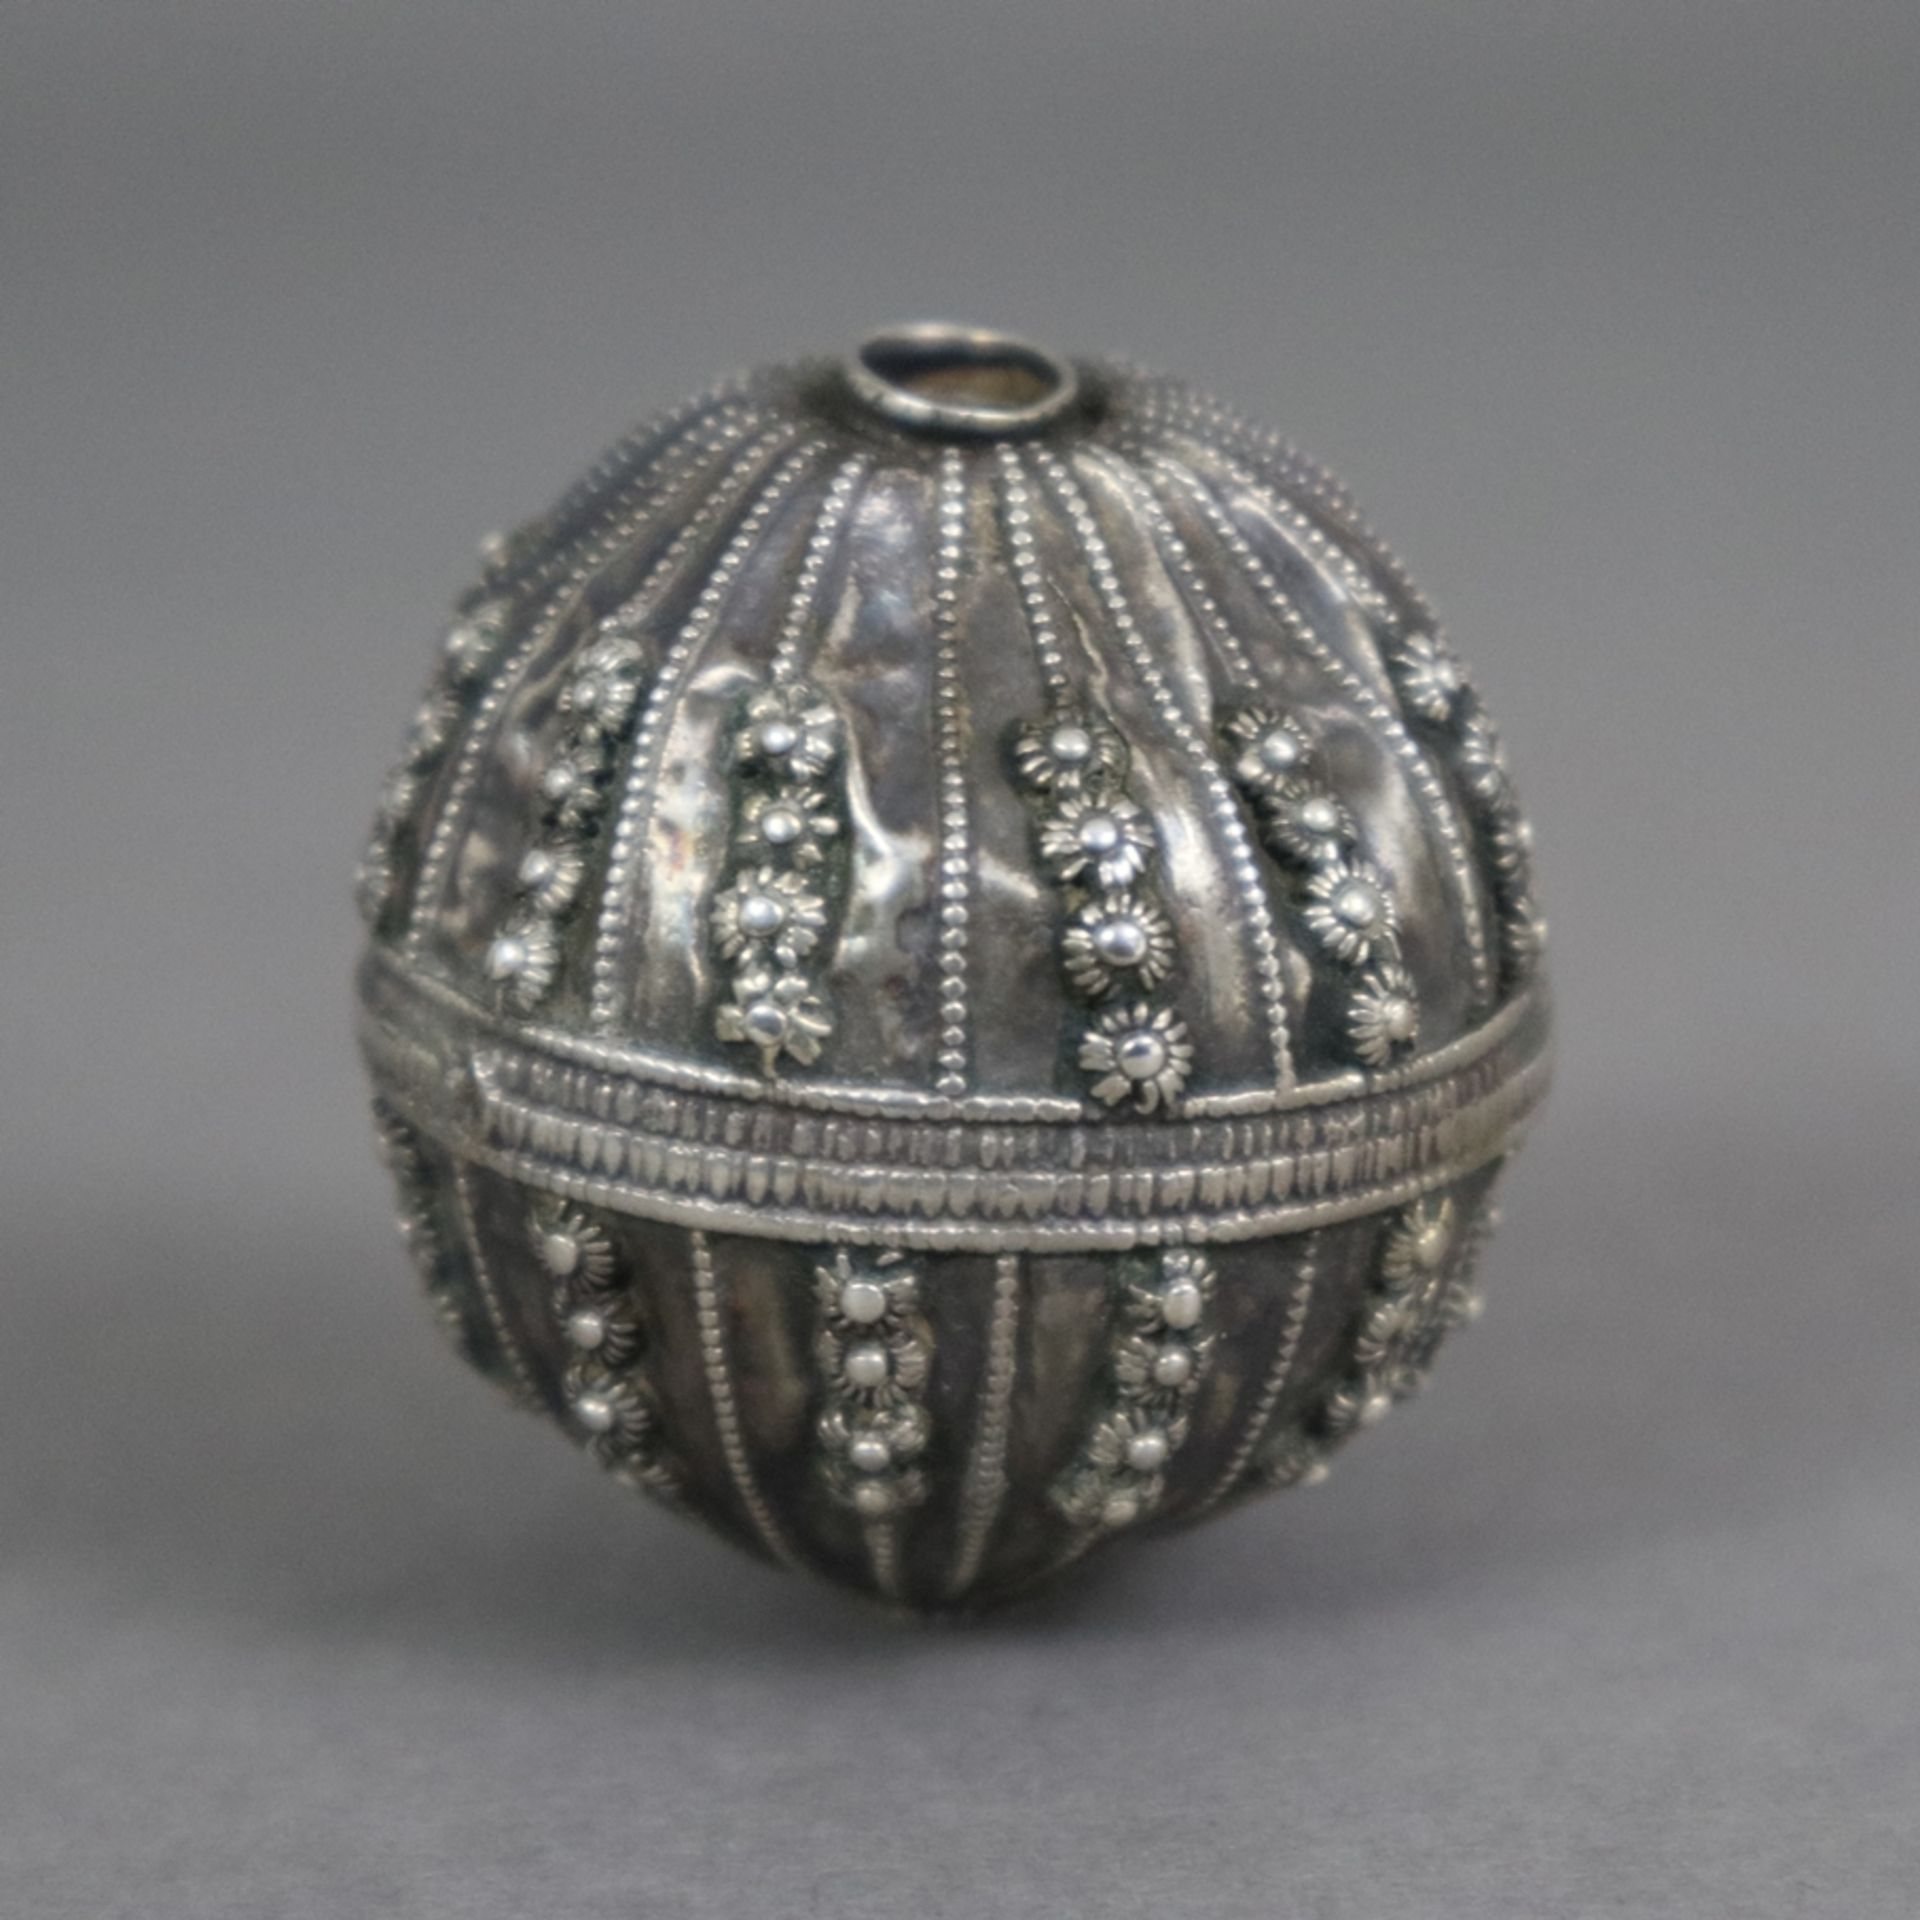 Zwei Kettenkugeln - Jemen, Silber, hohl gearbeitet, ornamentaler Reliefdekor, älter, Altersspuren, - Image 3 of 5